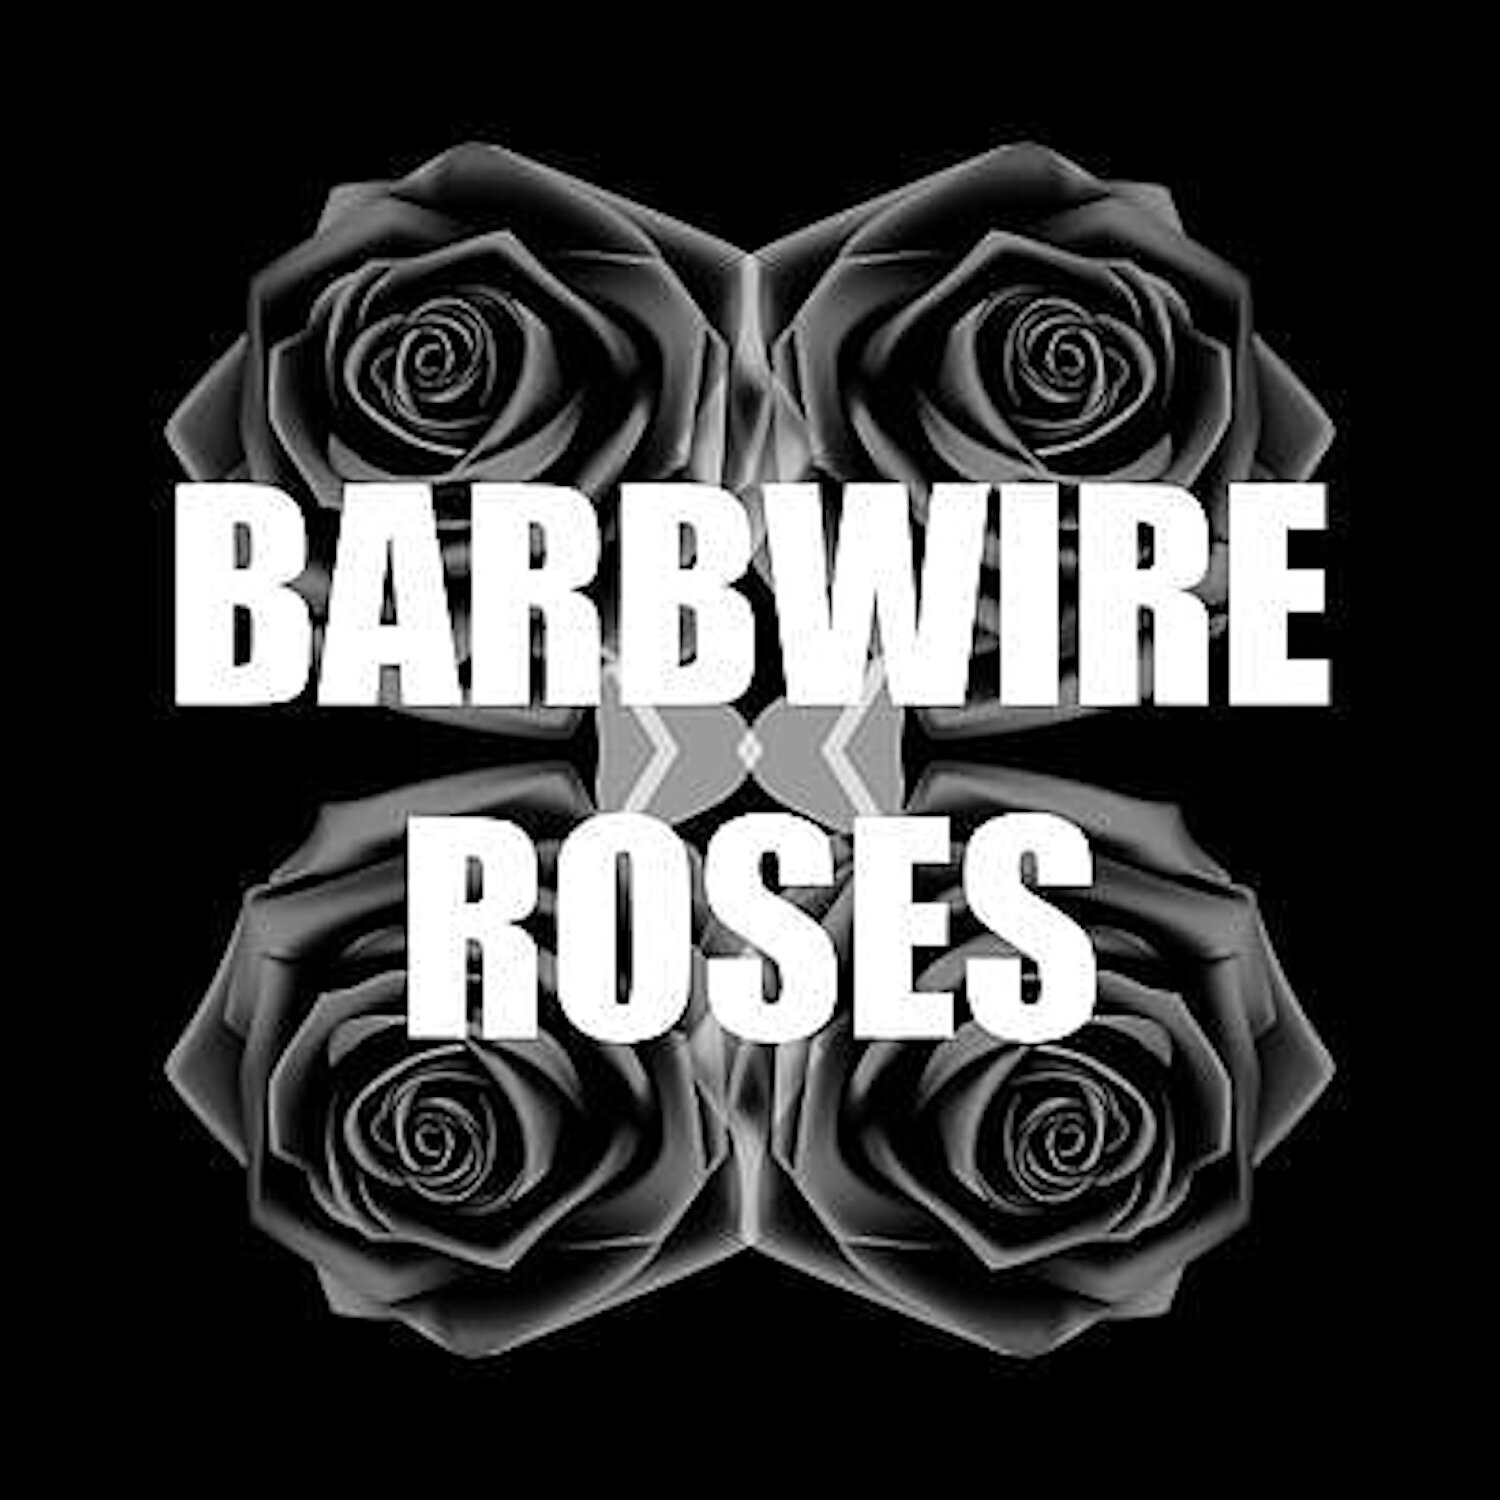 Barbwire Roses IMG_20191106_144046_707.jpg